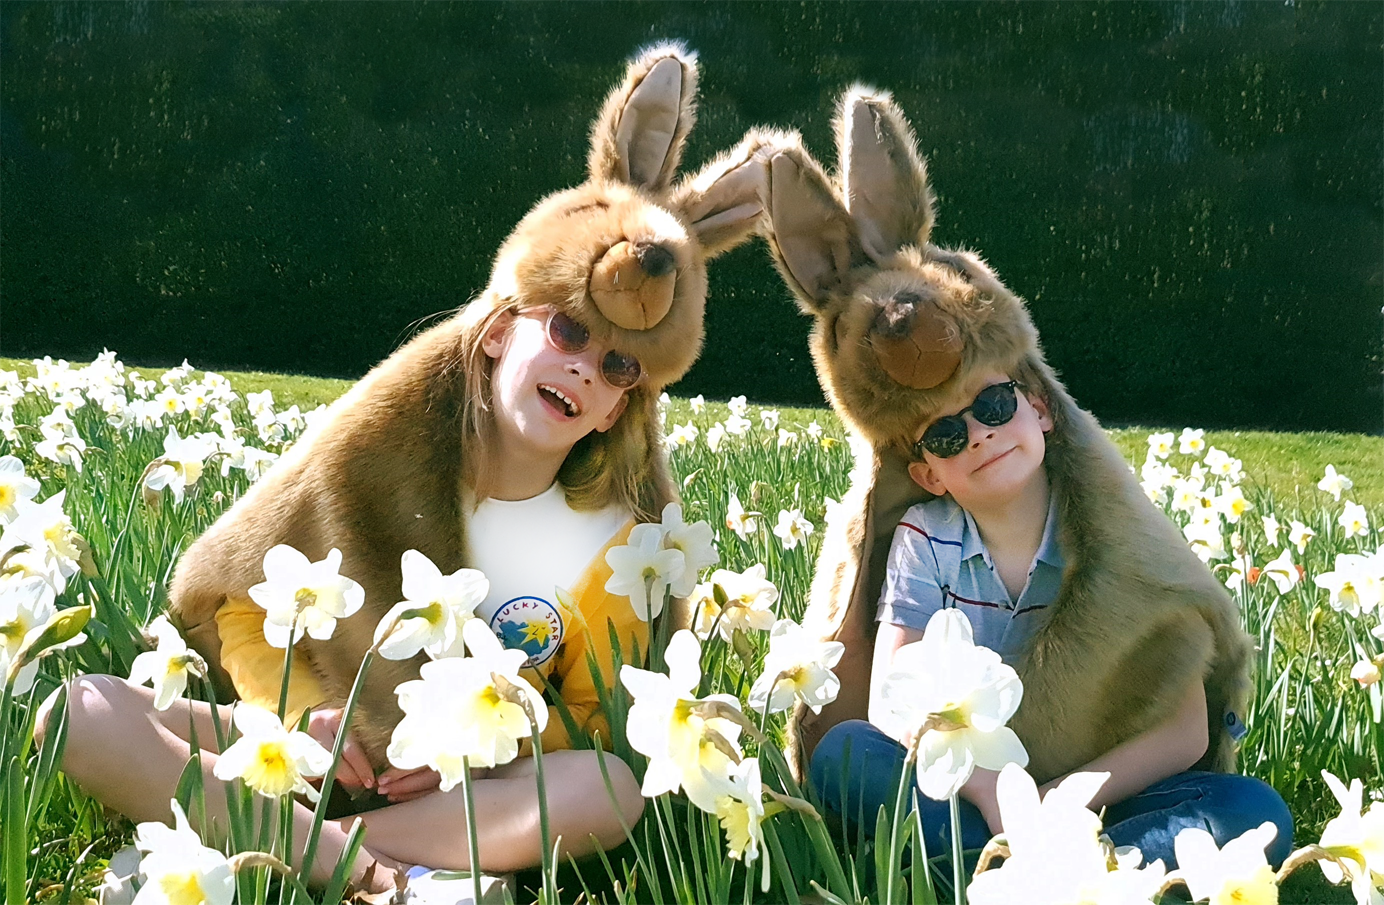 Wild & Soft Animal Costume - Hare